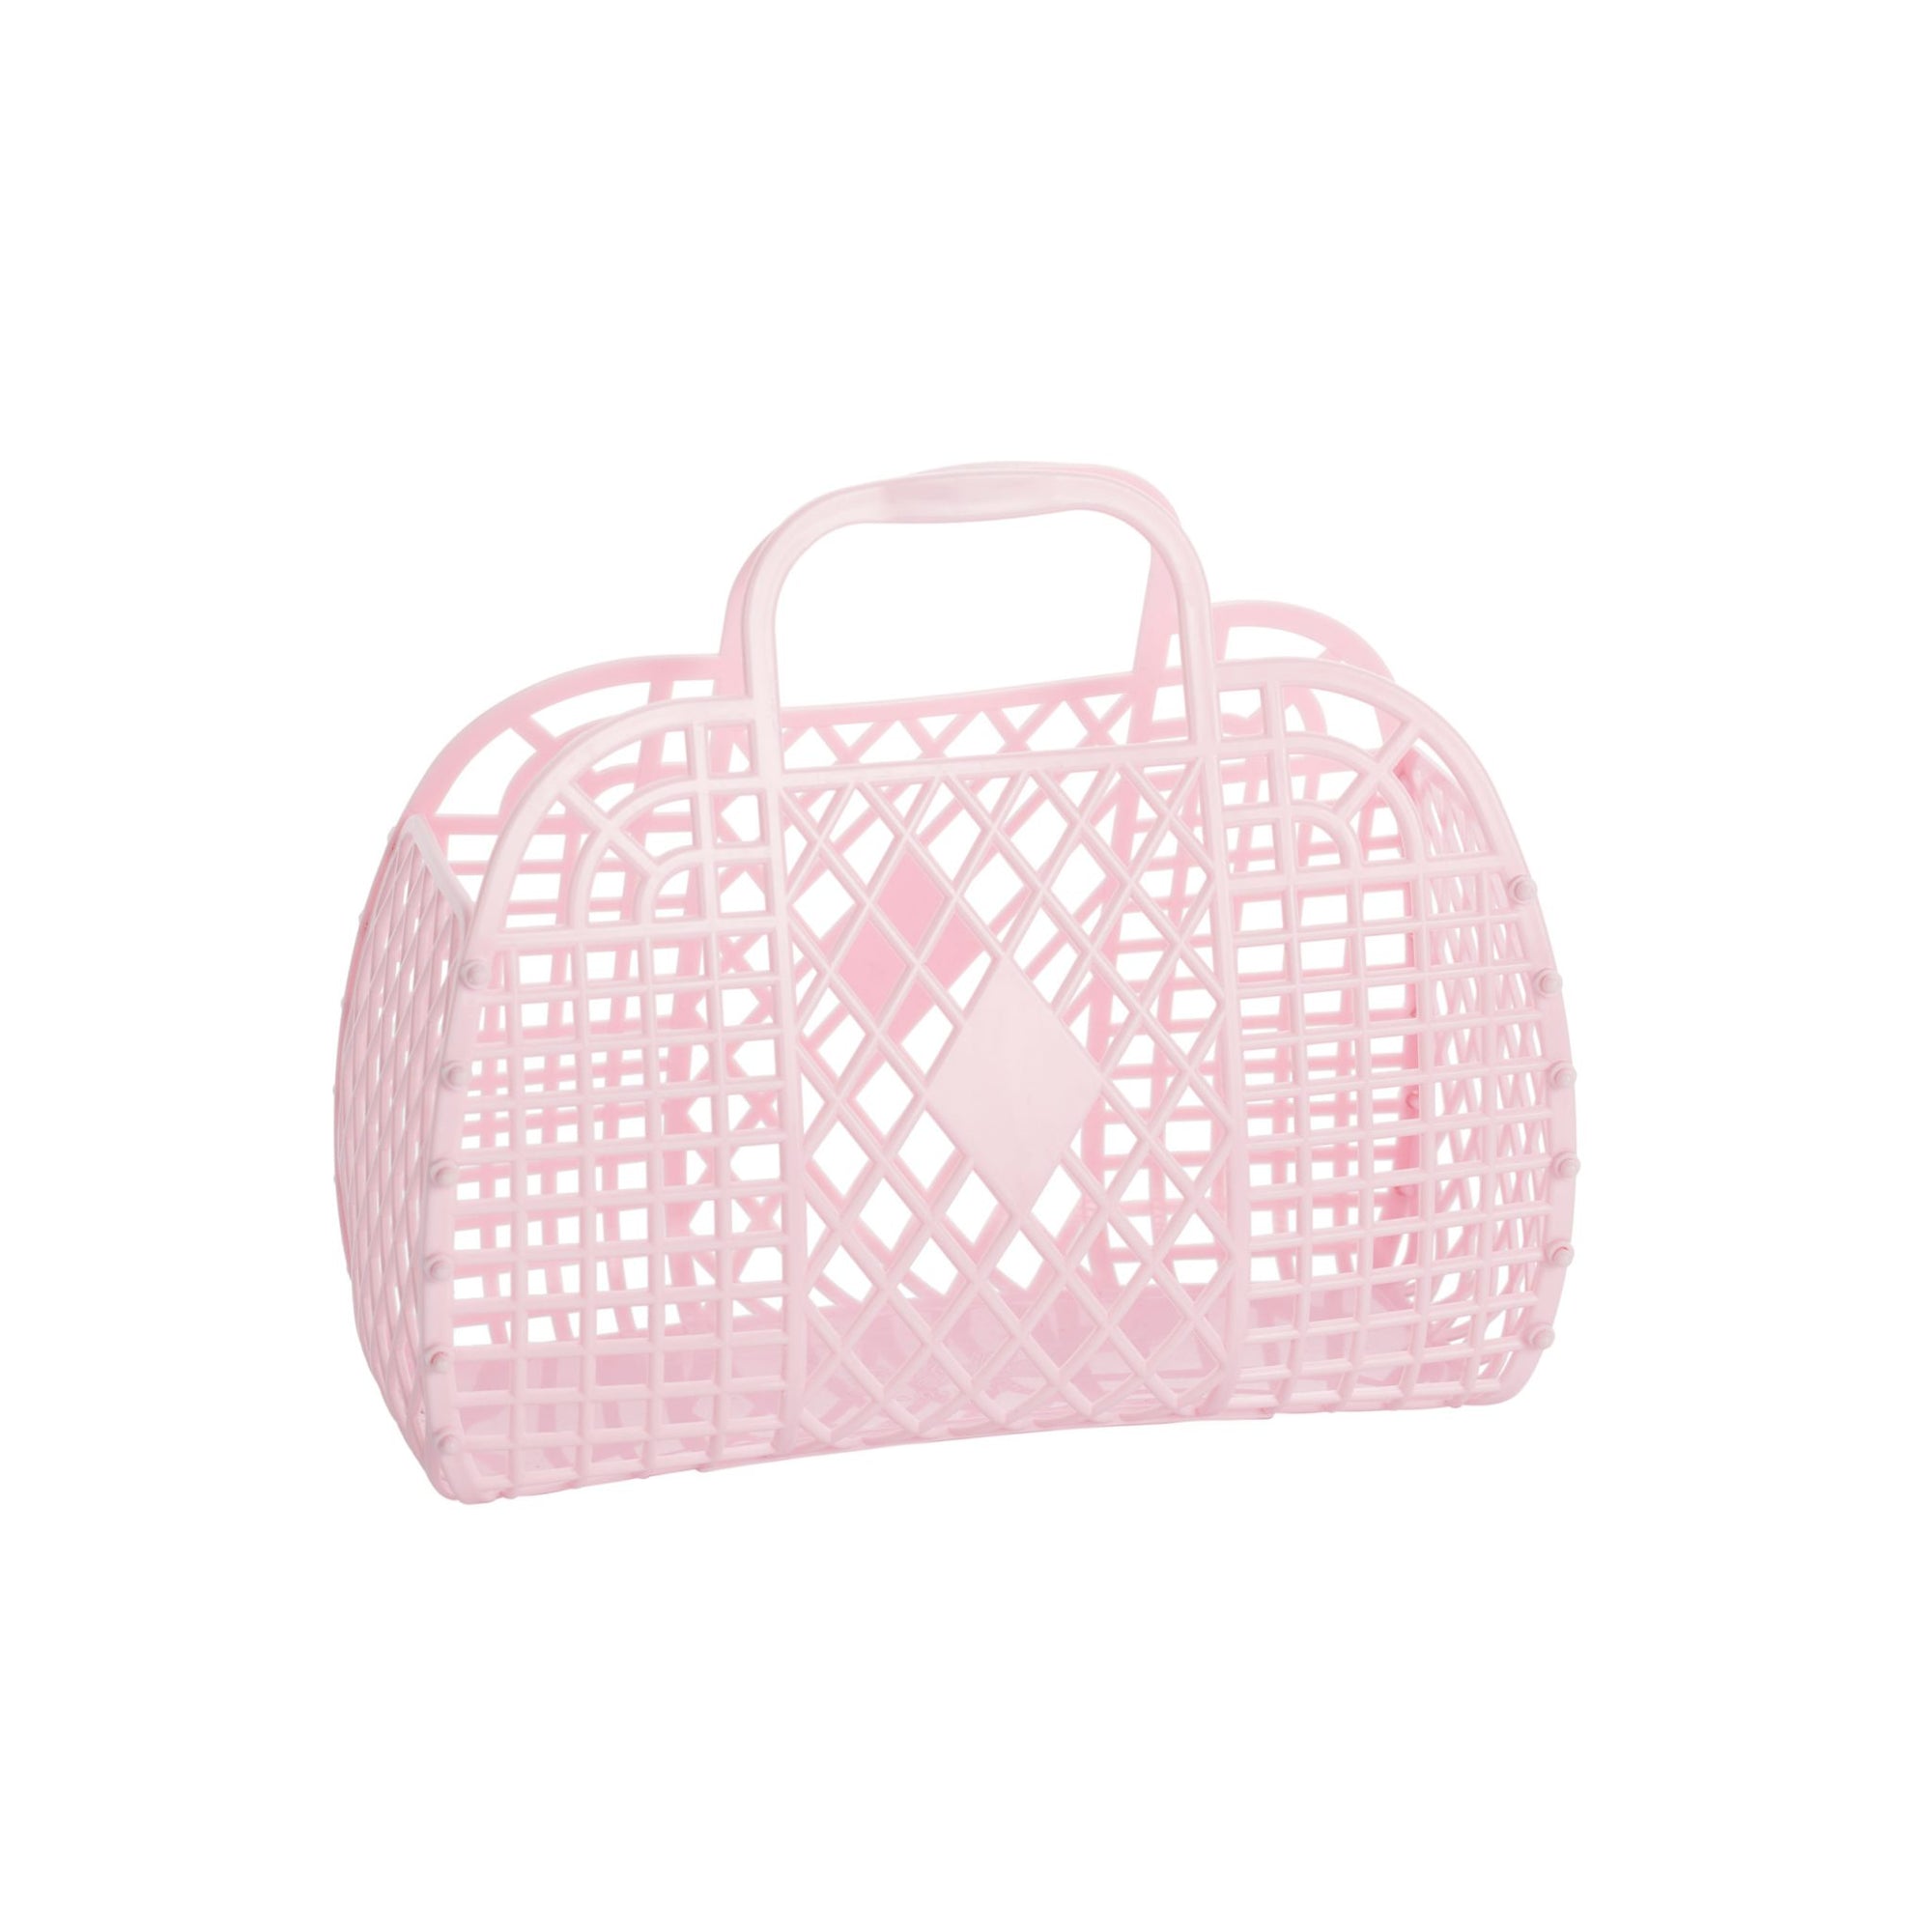 Sun Jellies Small Retro Basket in Pink